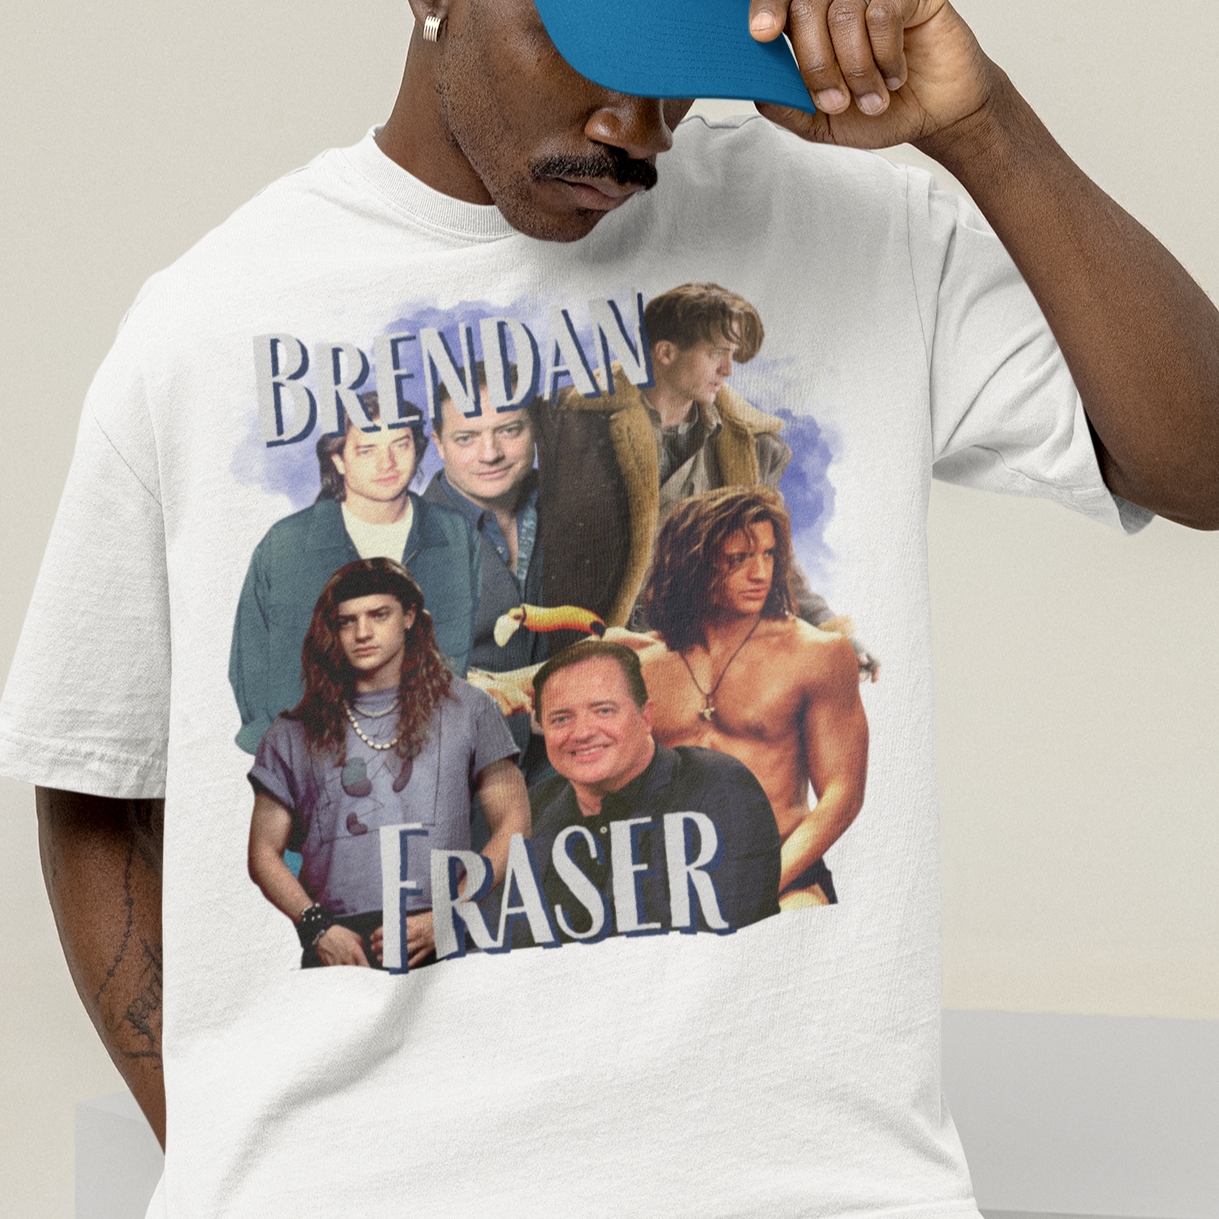 Brendan Fraser Shirt, Bootleg Vintage Shirt